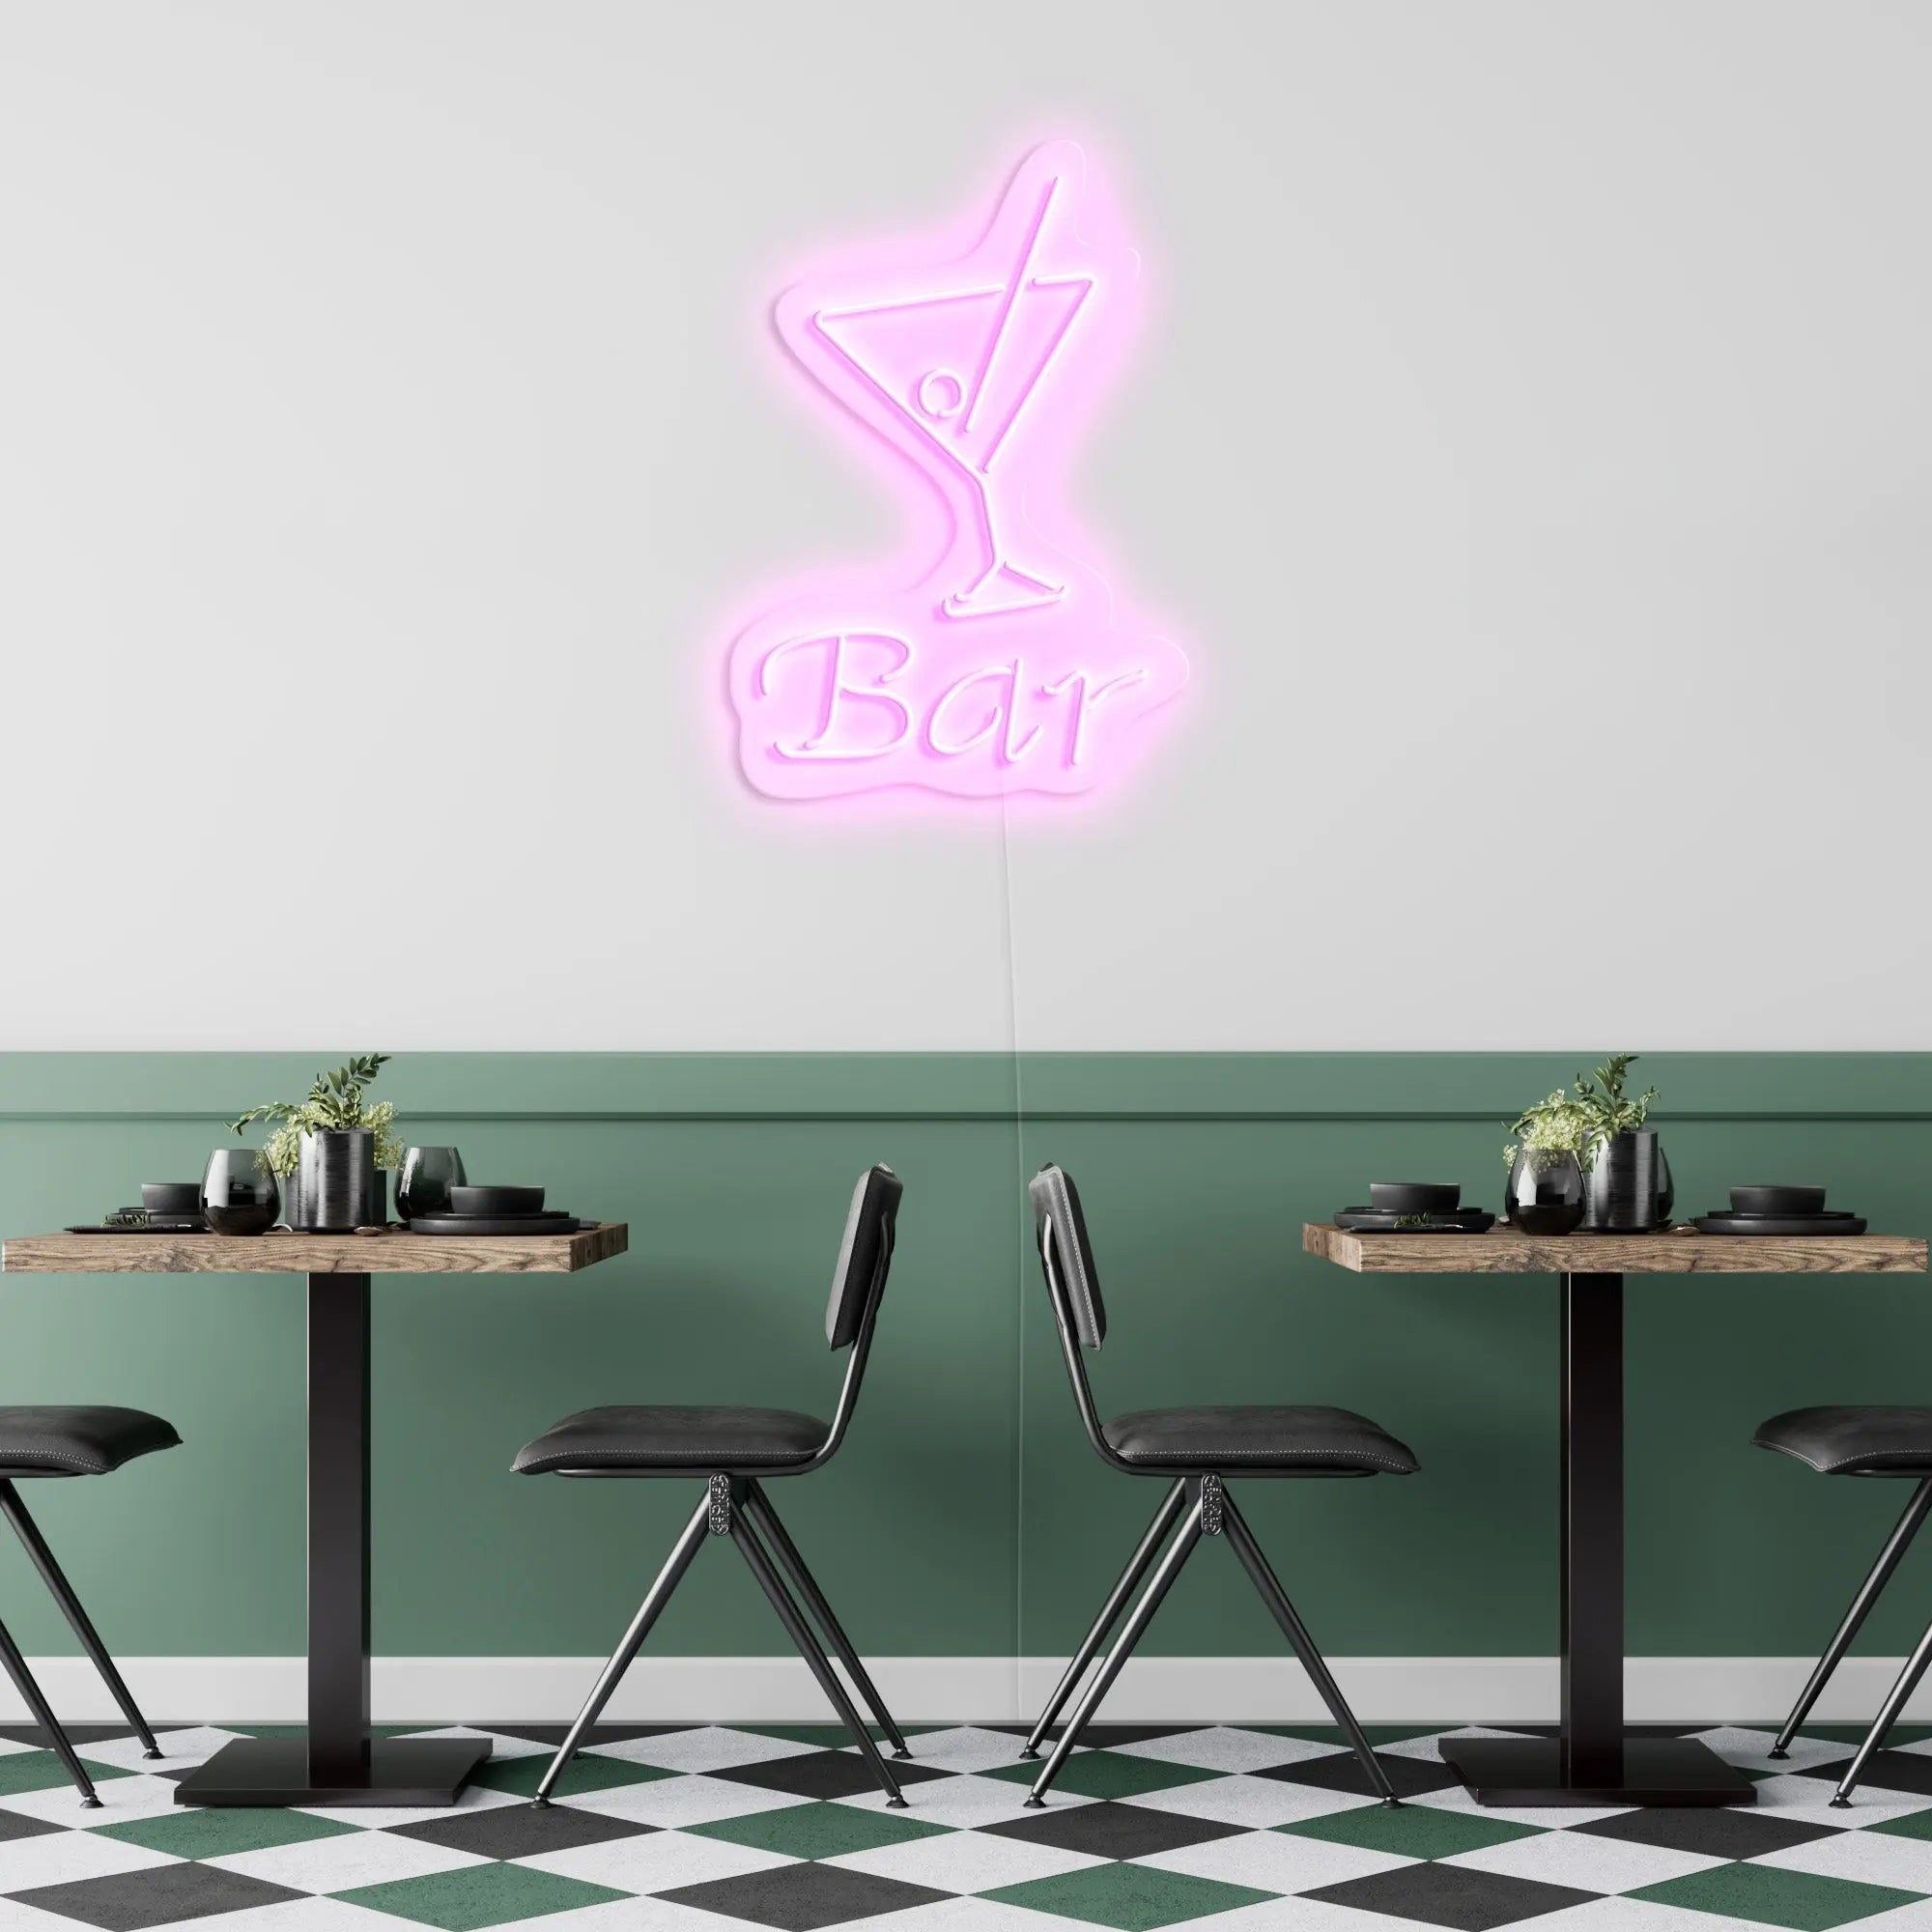 'Bar' LED Neon Sign - neonaffair